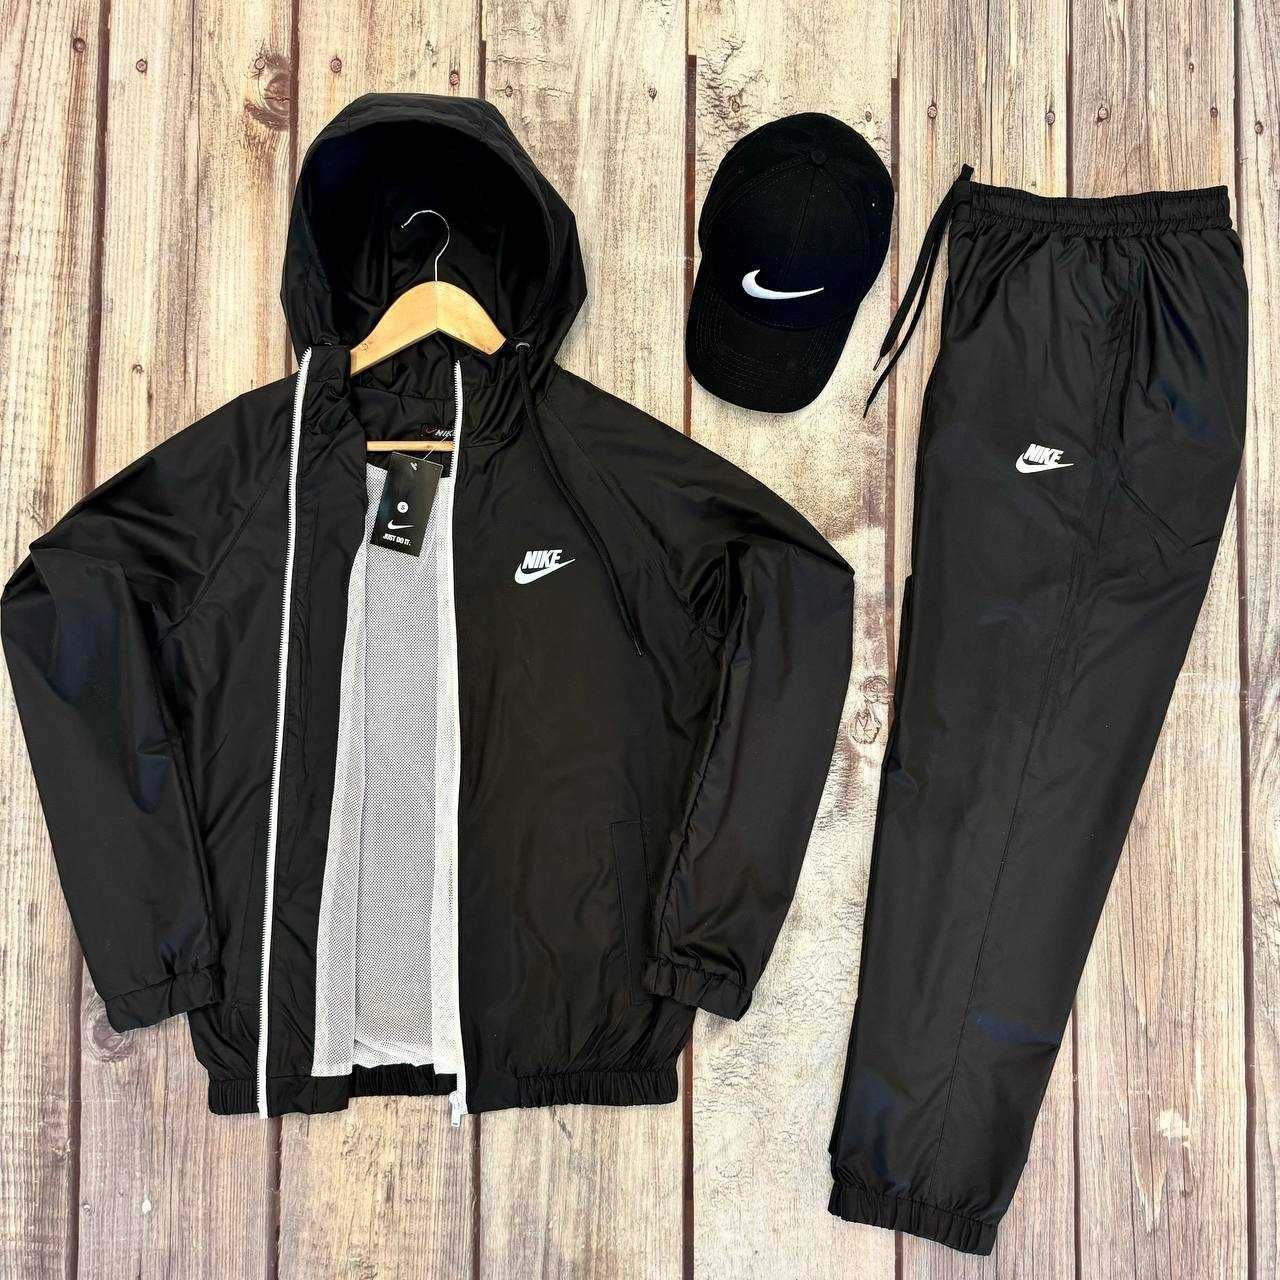 Спортивный костюм мужской Nike Куртка Штаны Найк весенний осенний